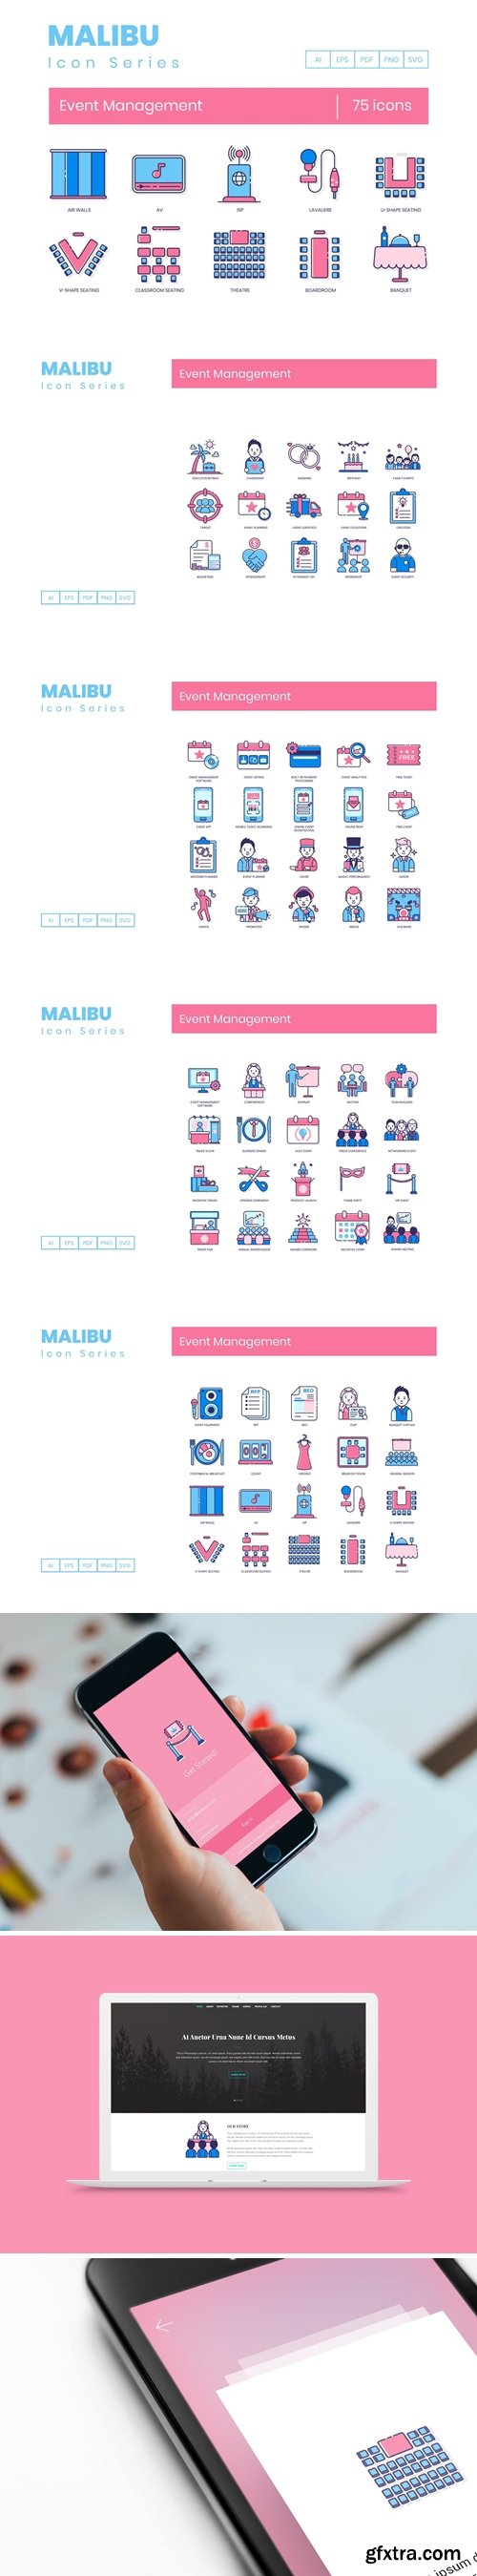 75 Event Management Icons - Malibu Series